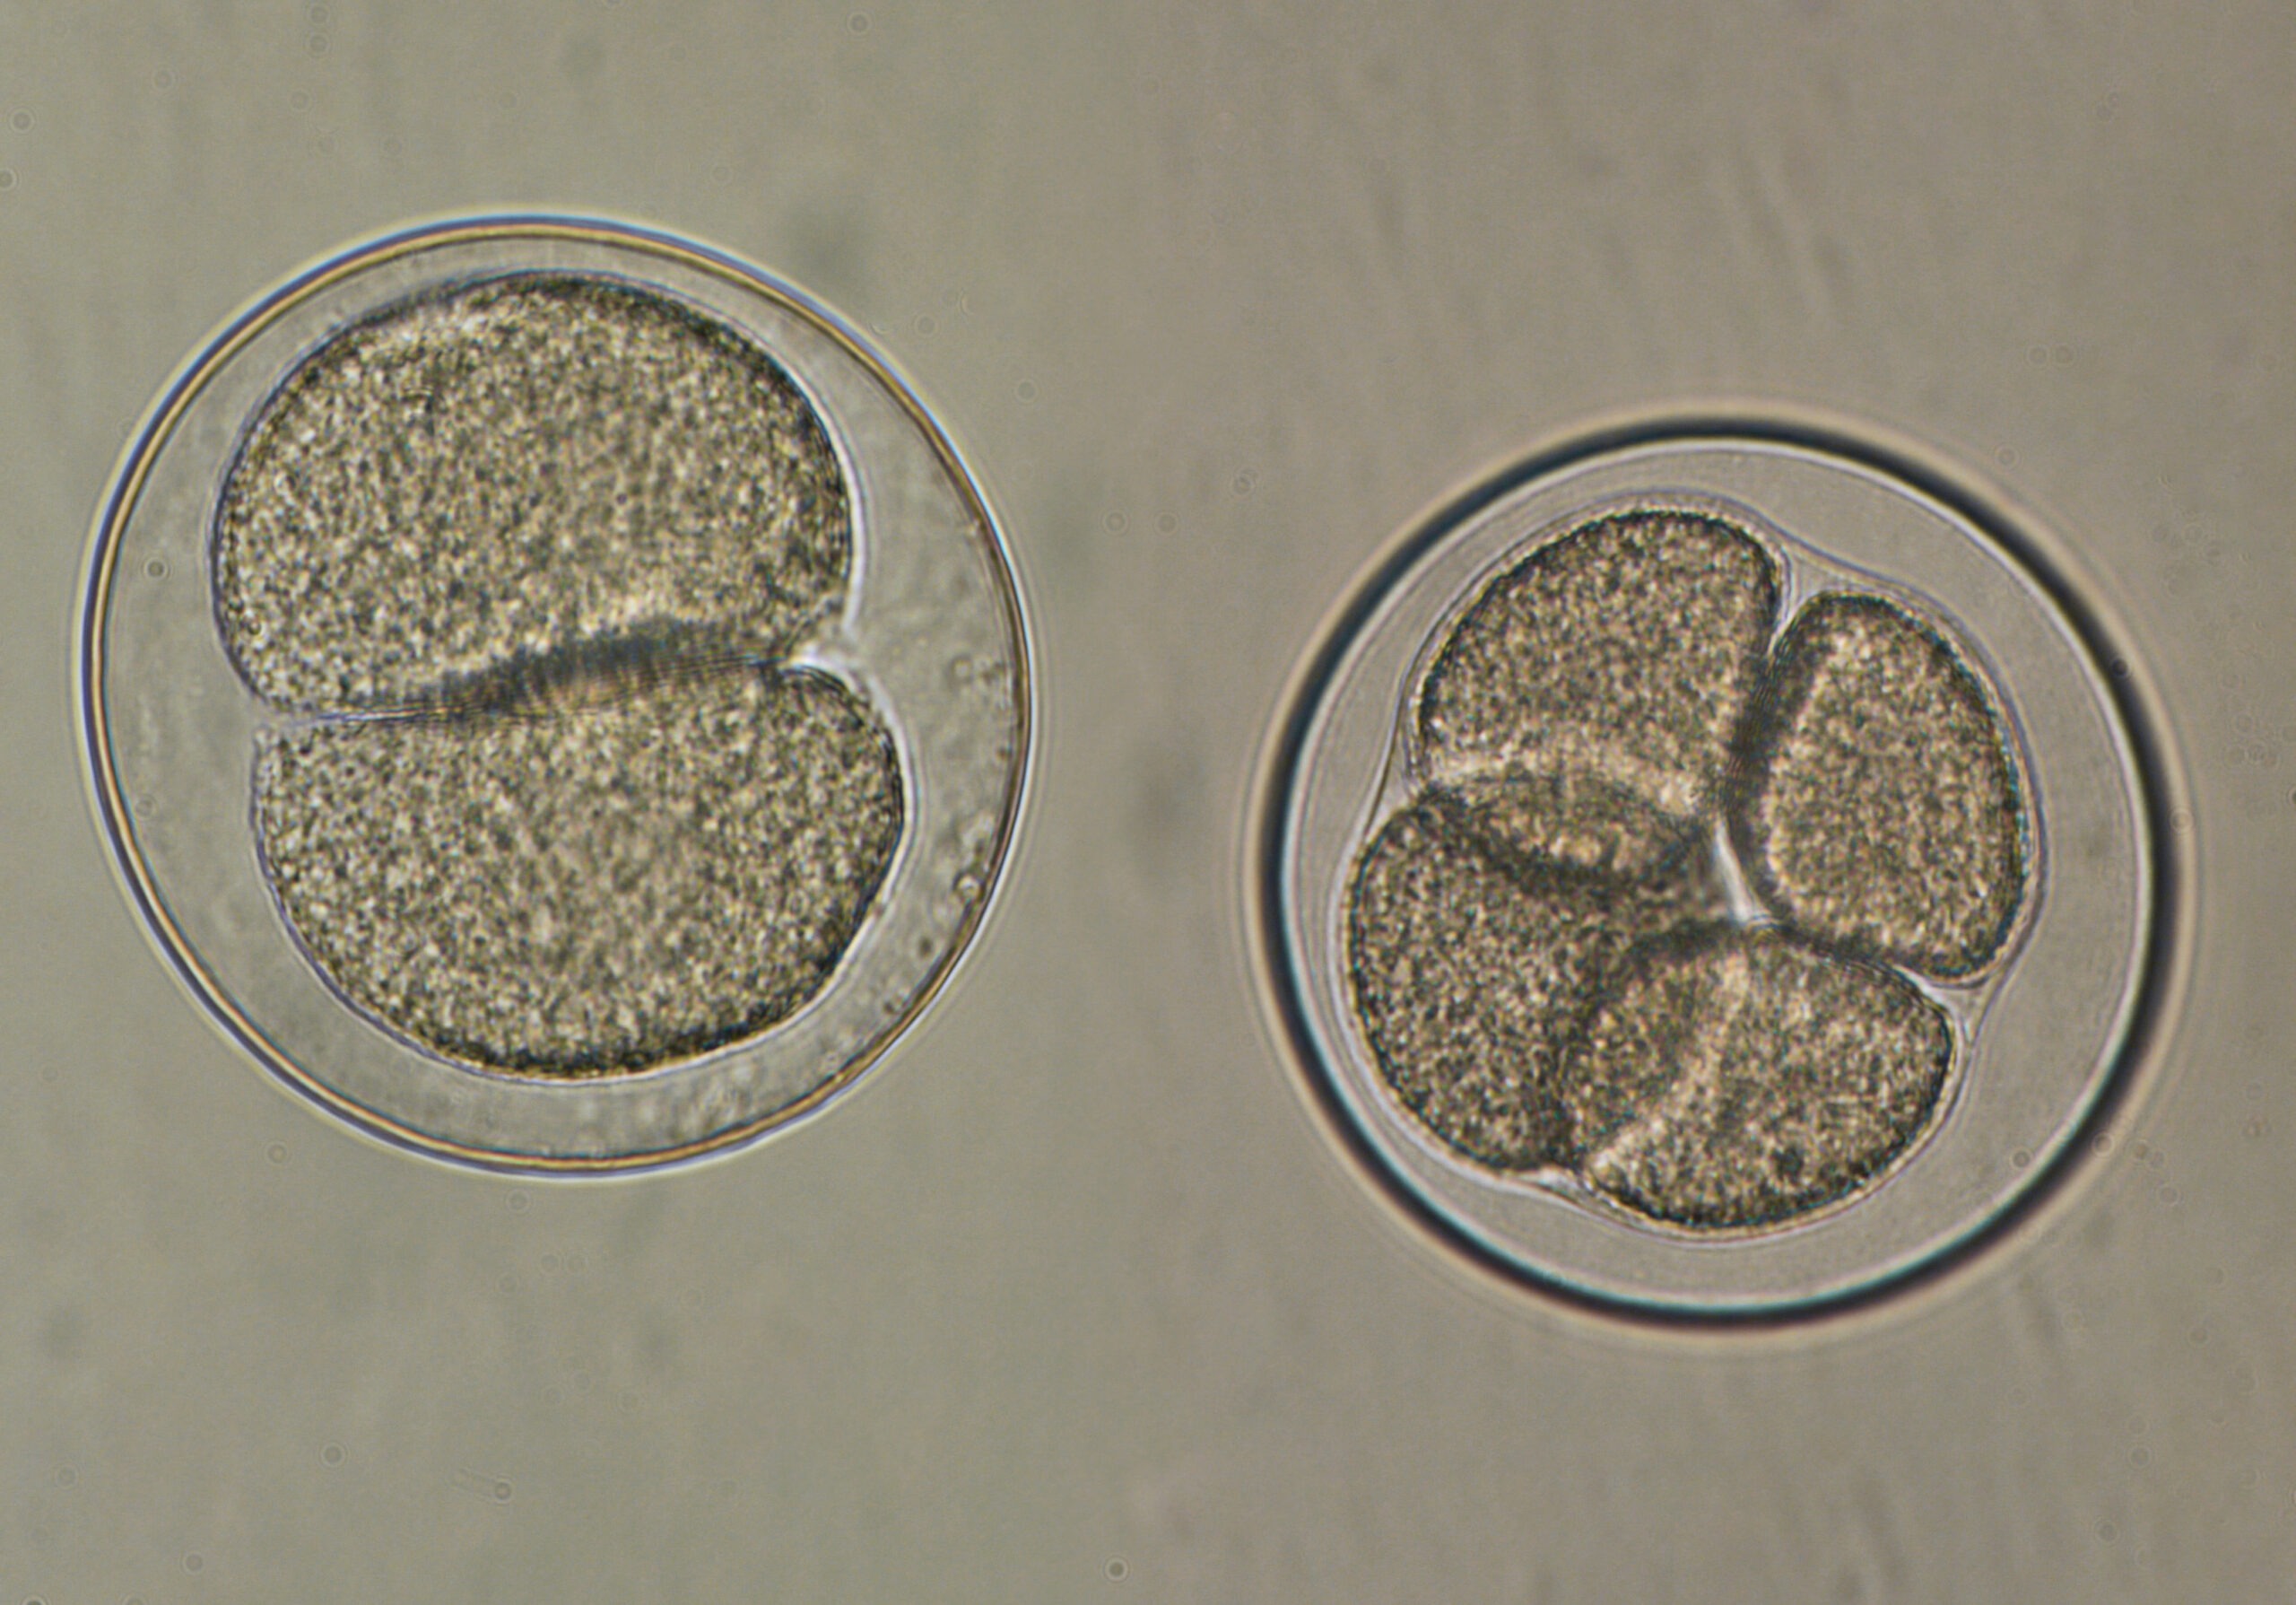 IVF Embryo Culture Media: The Key to Successful In Vitro Fertilization